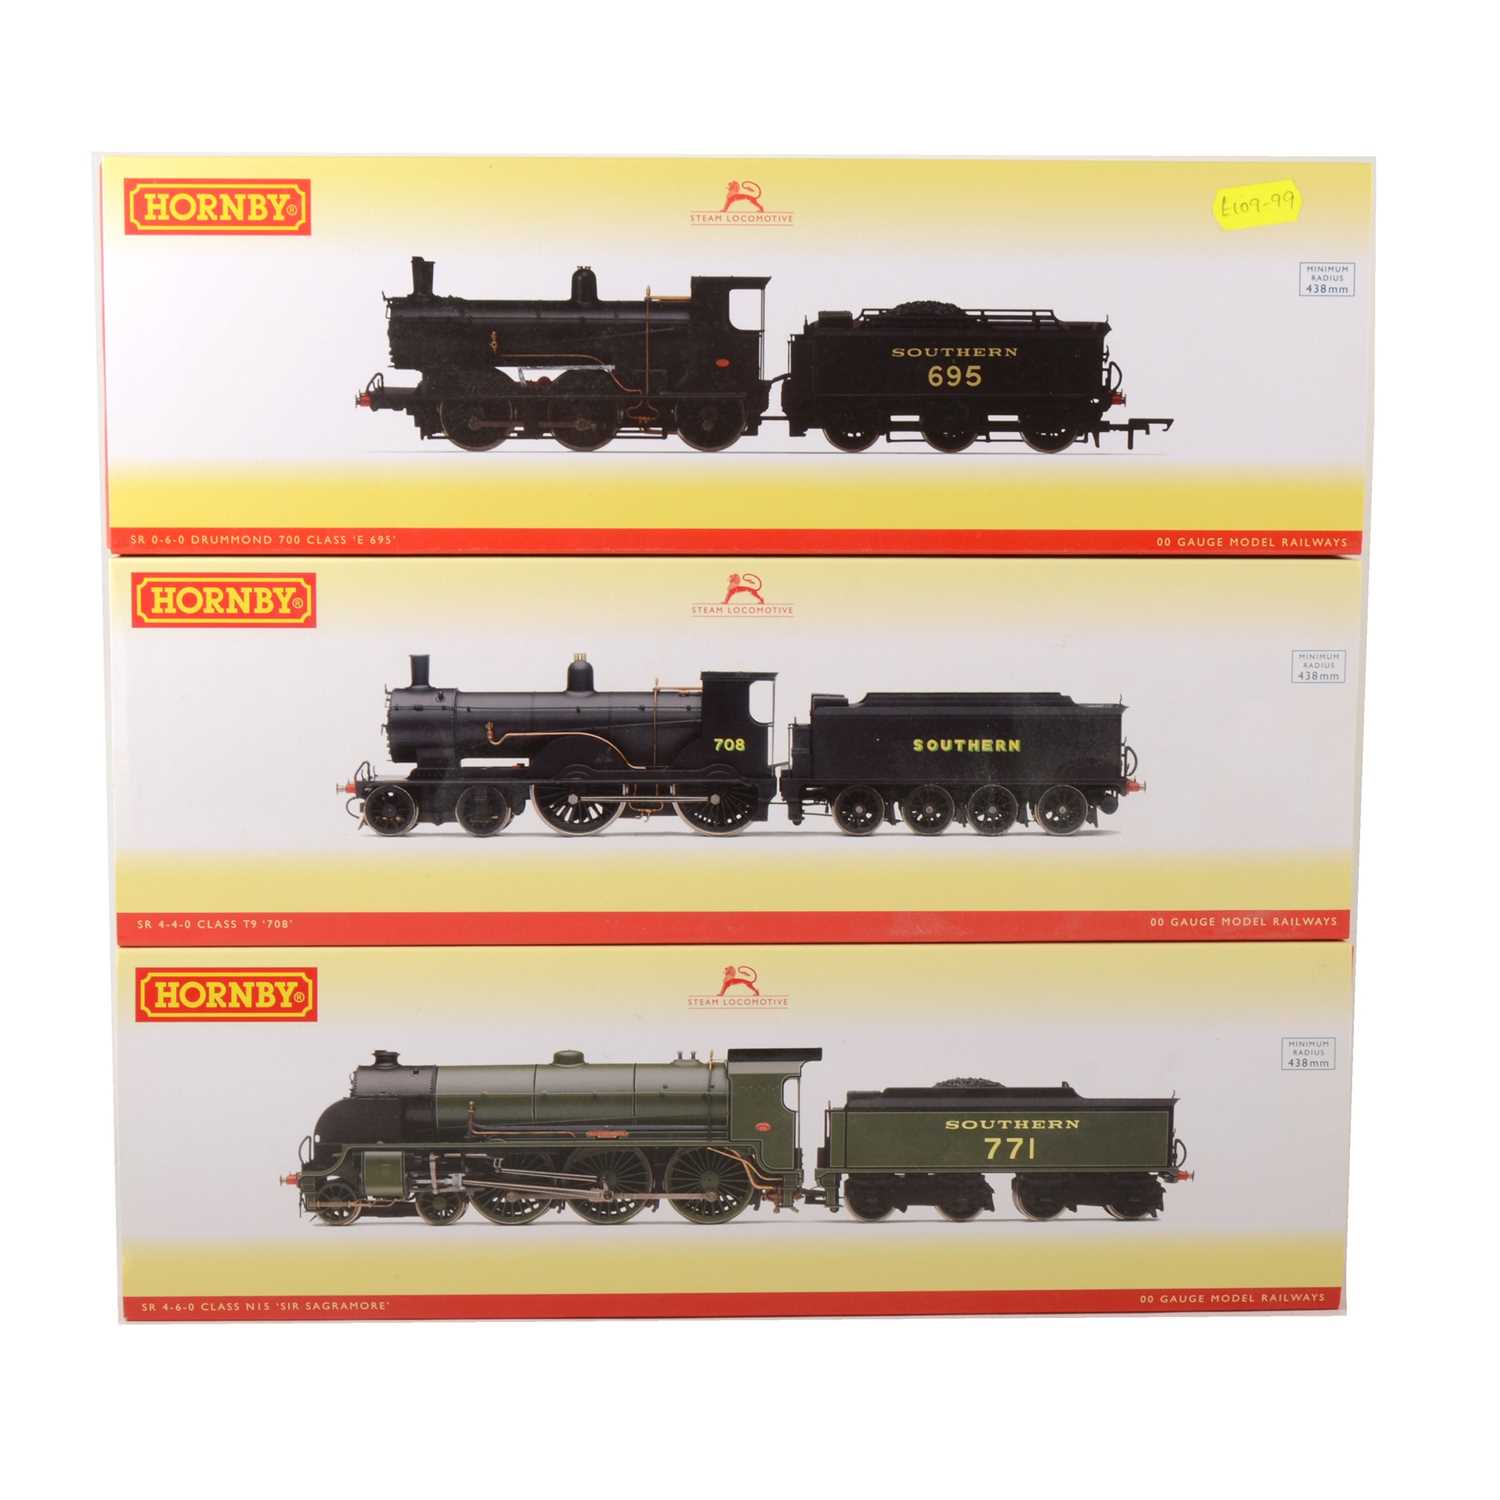 508 - Three Hornby OO gauge model railway locomotives, R3010, R3108 and R3238.